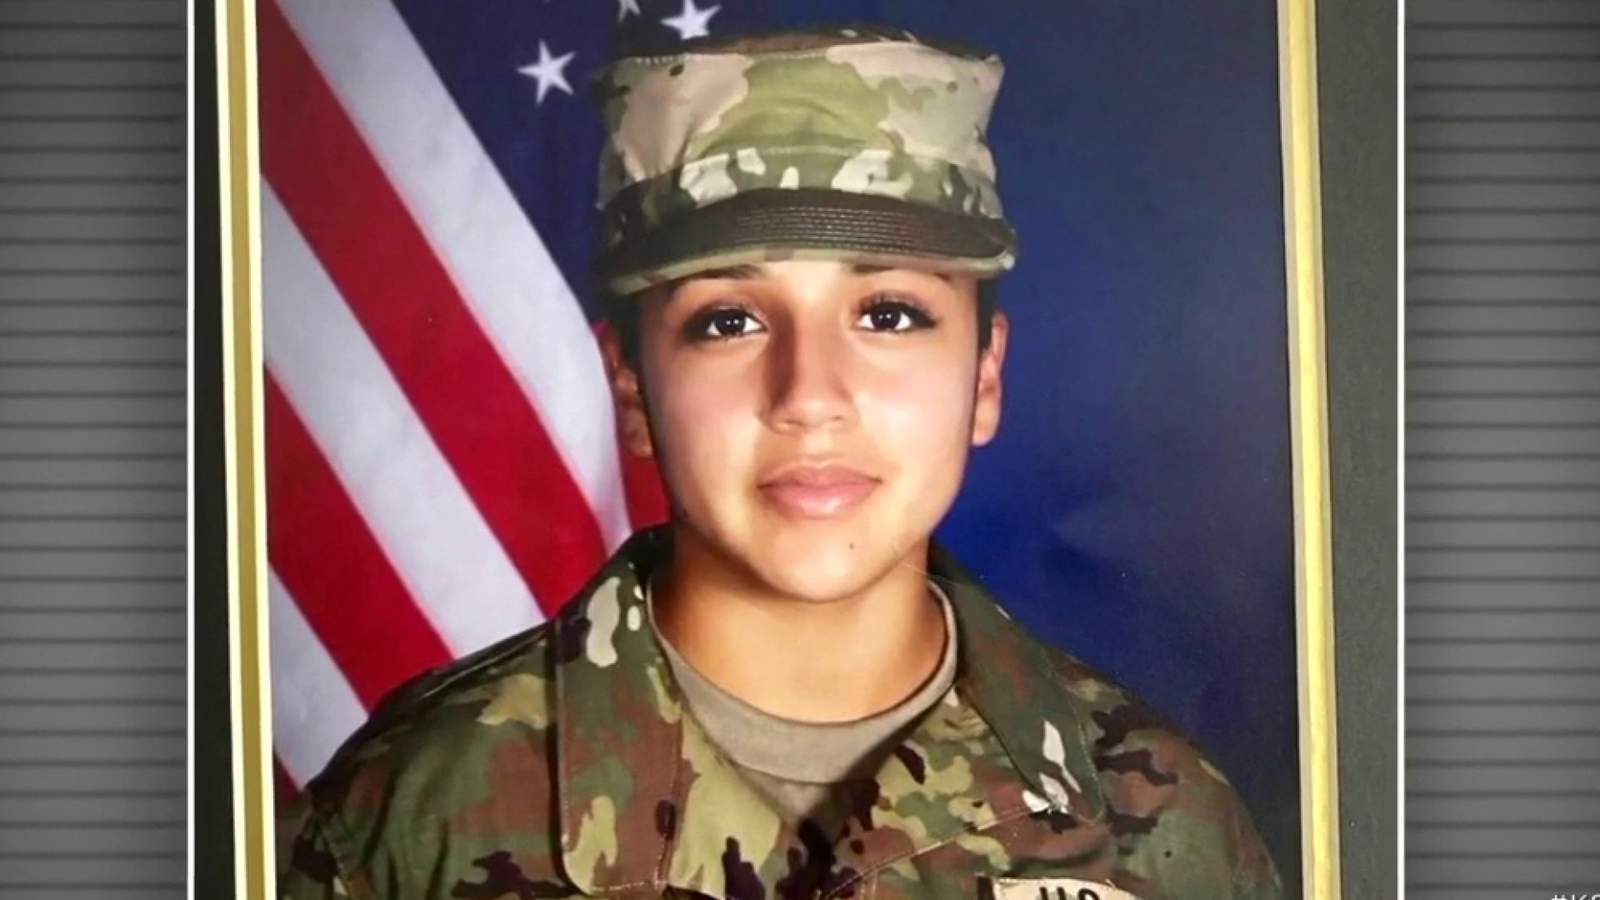 Congress investigates Fort Hood following soldier deaths